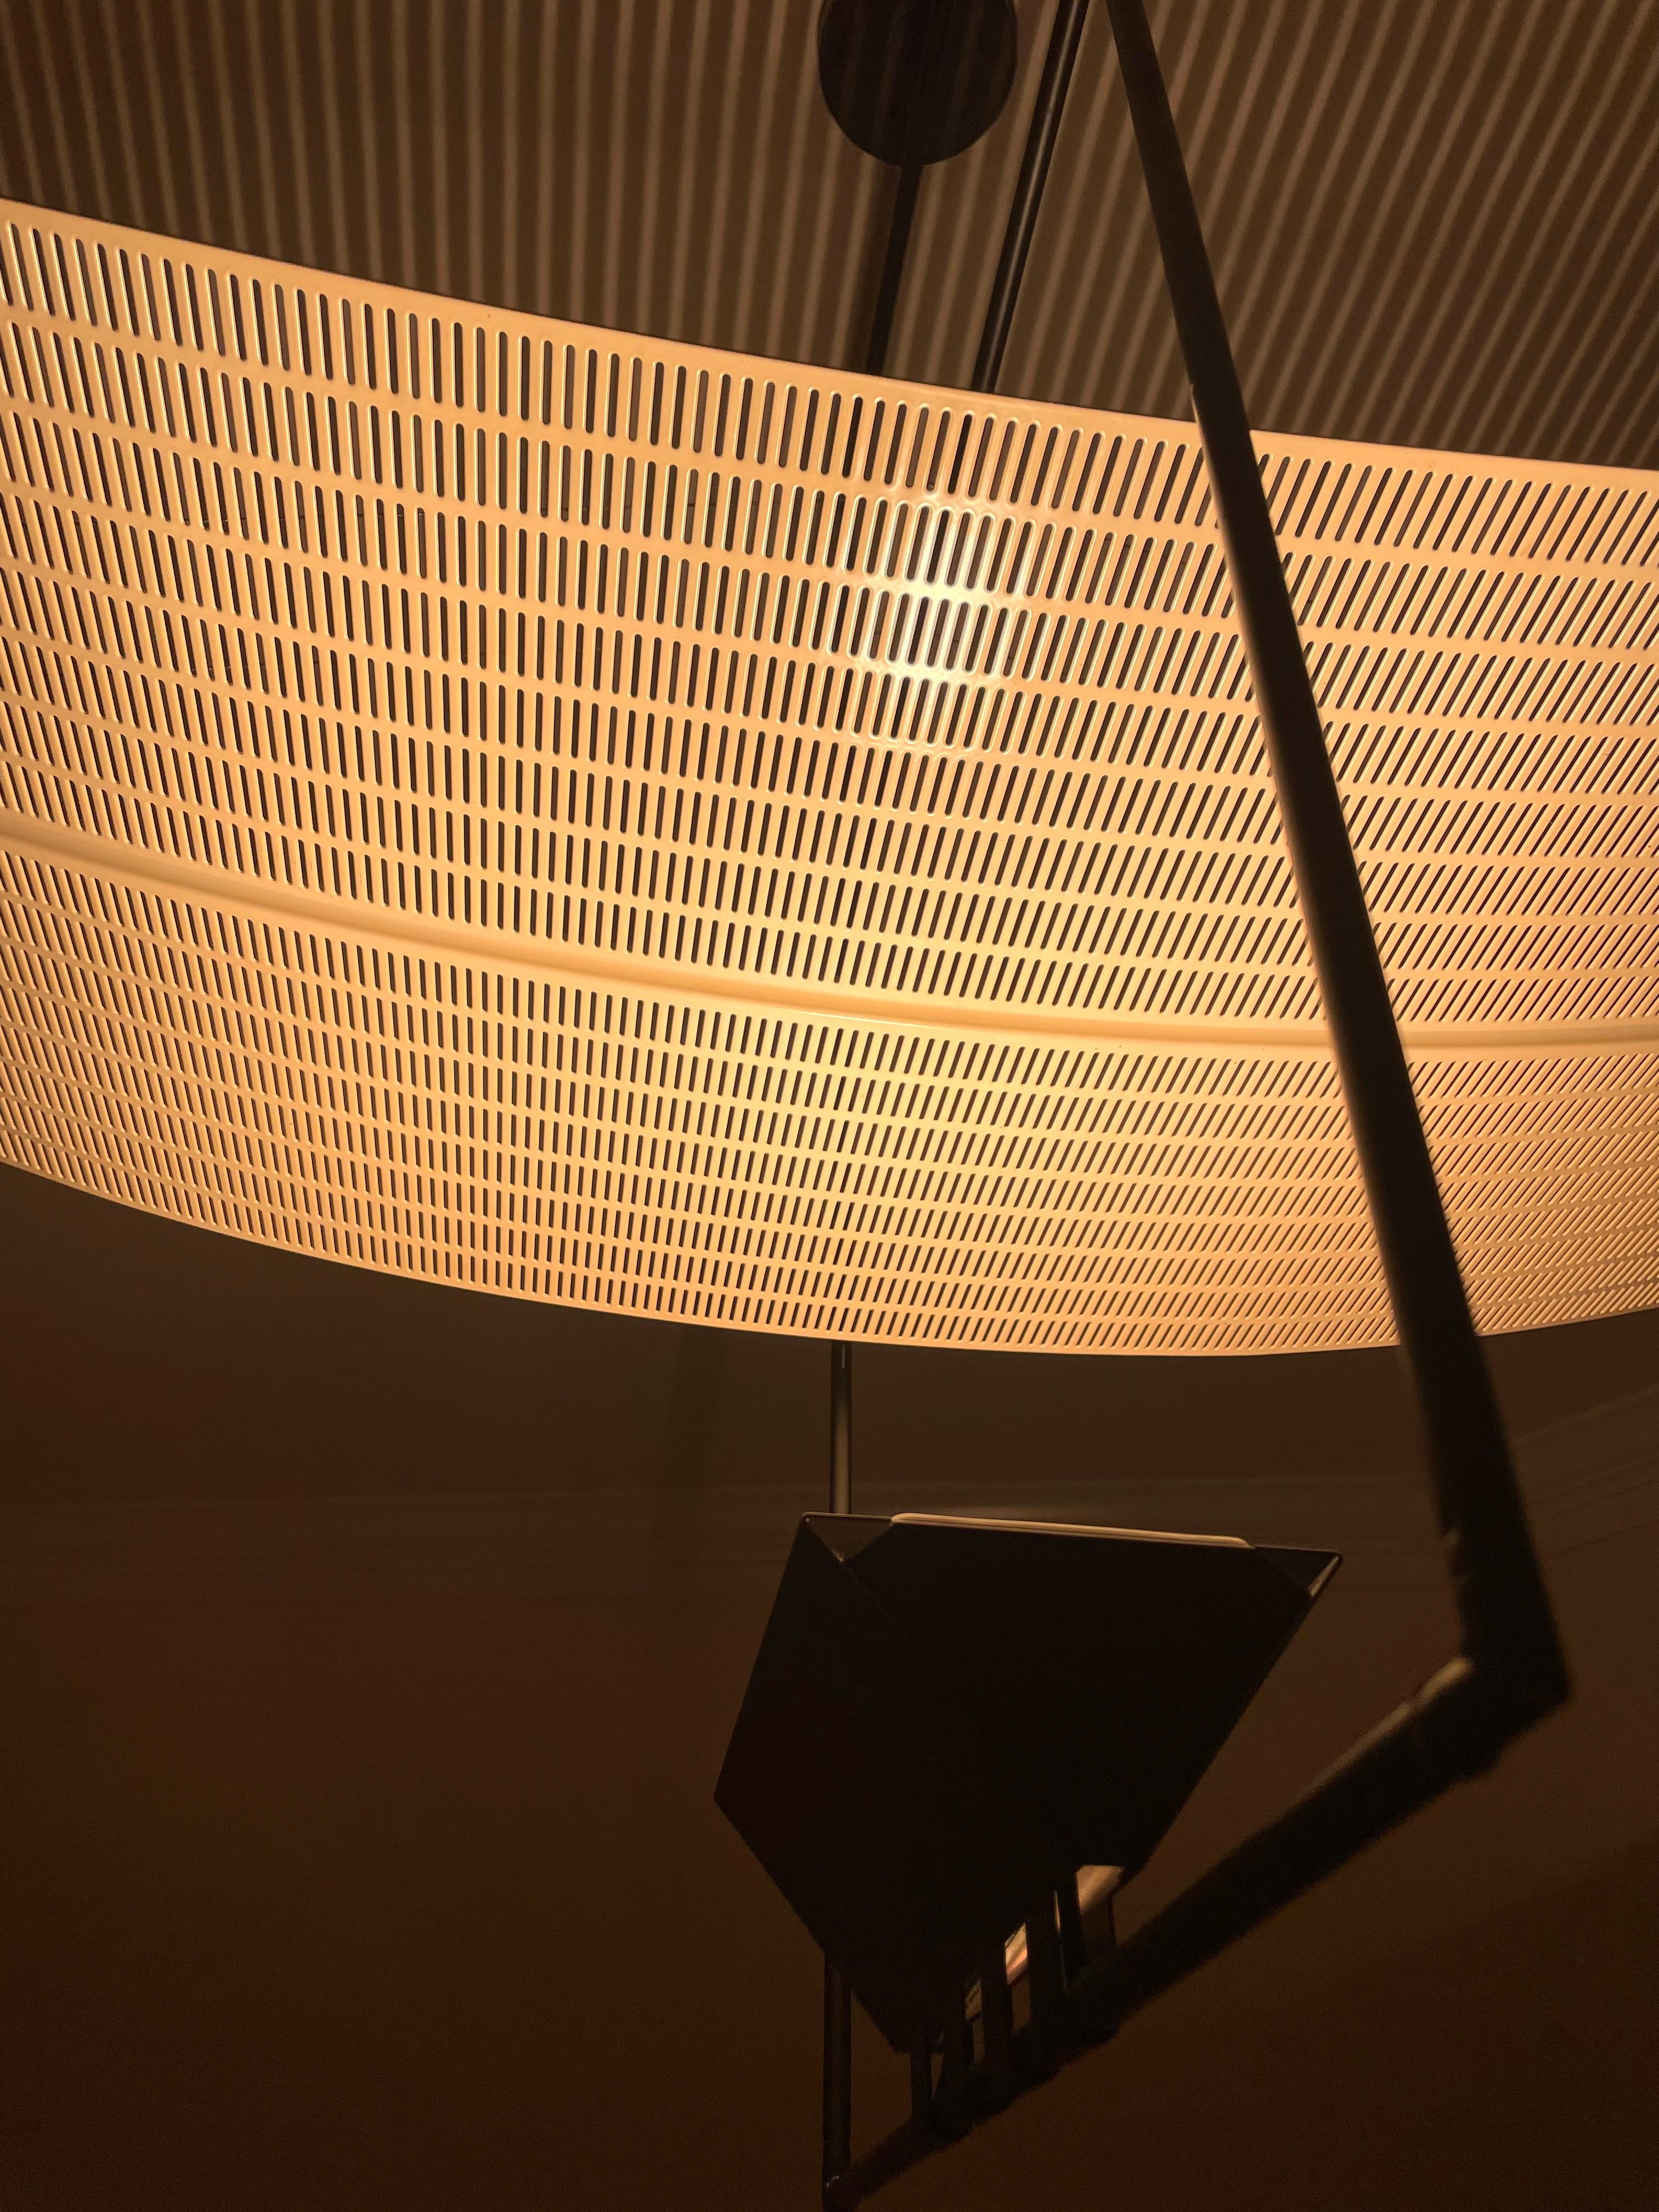 Italian Zefiro Hanging lamp designed by Mario Botta for Artemide